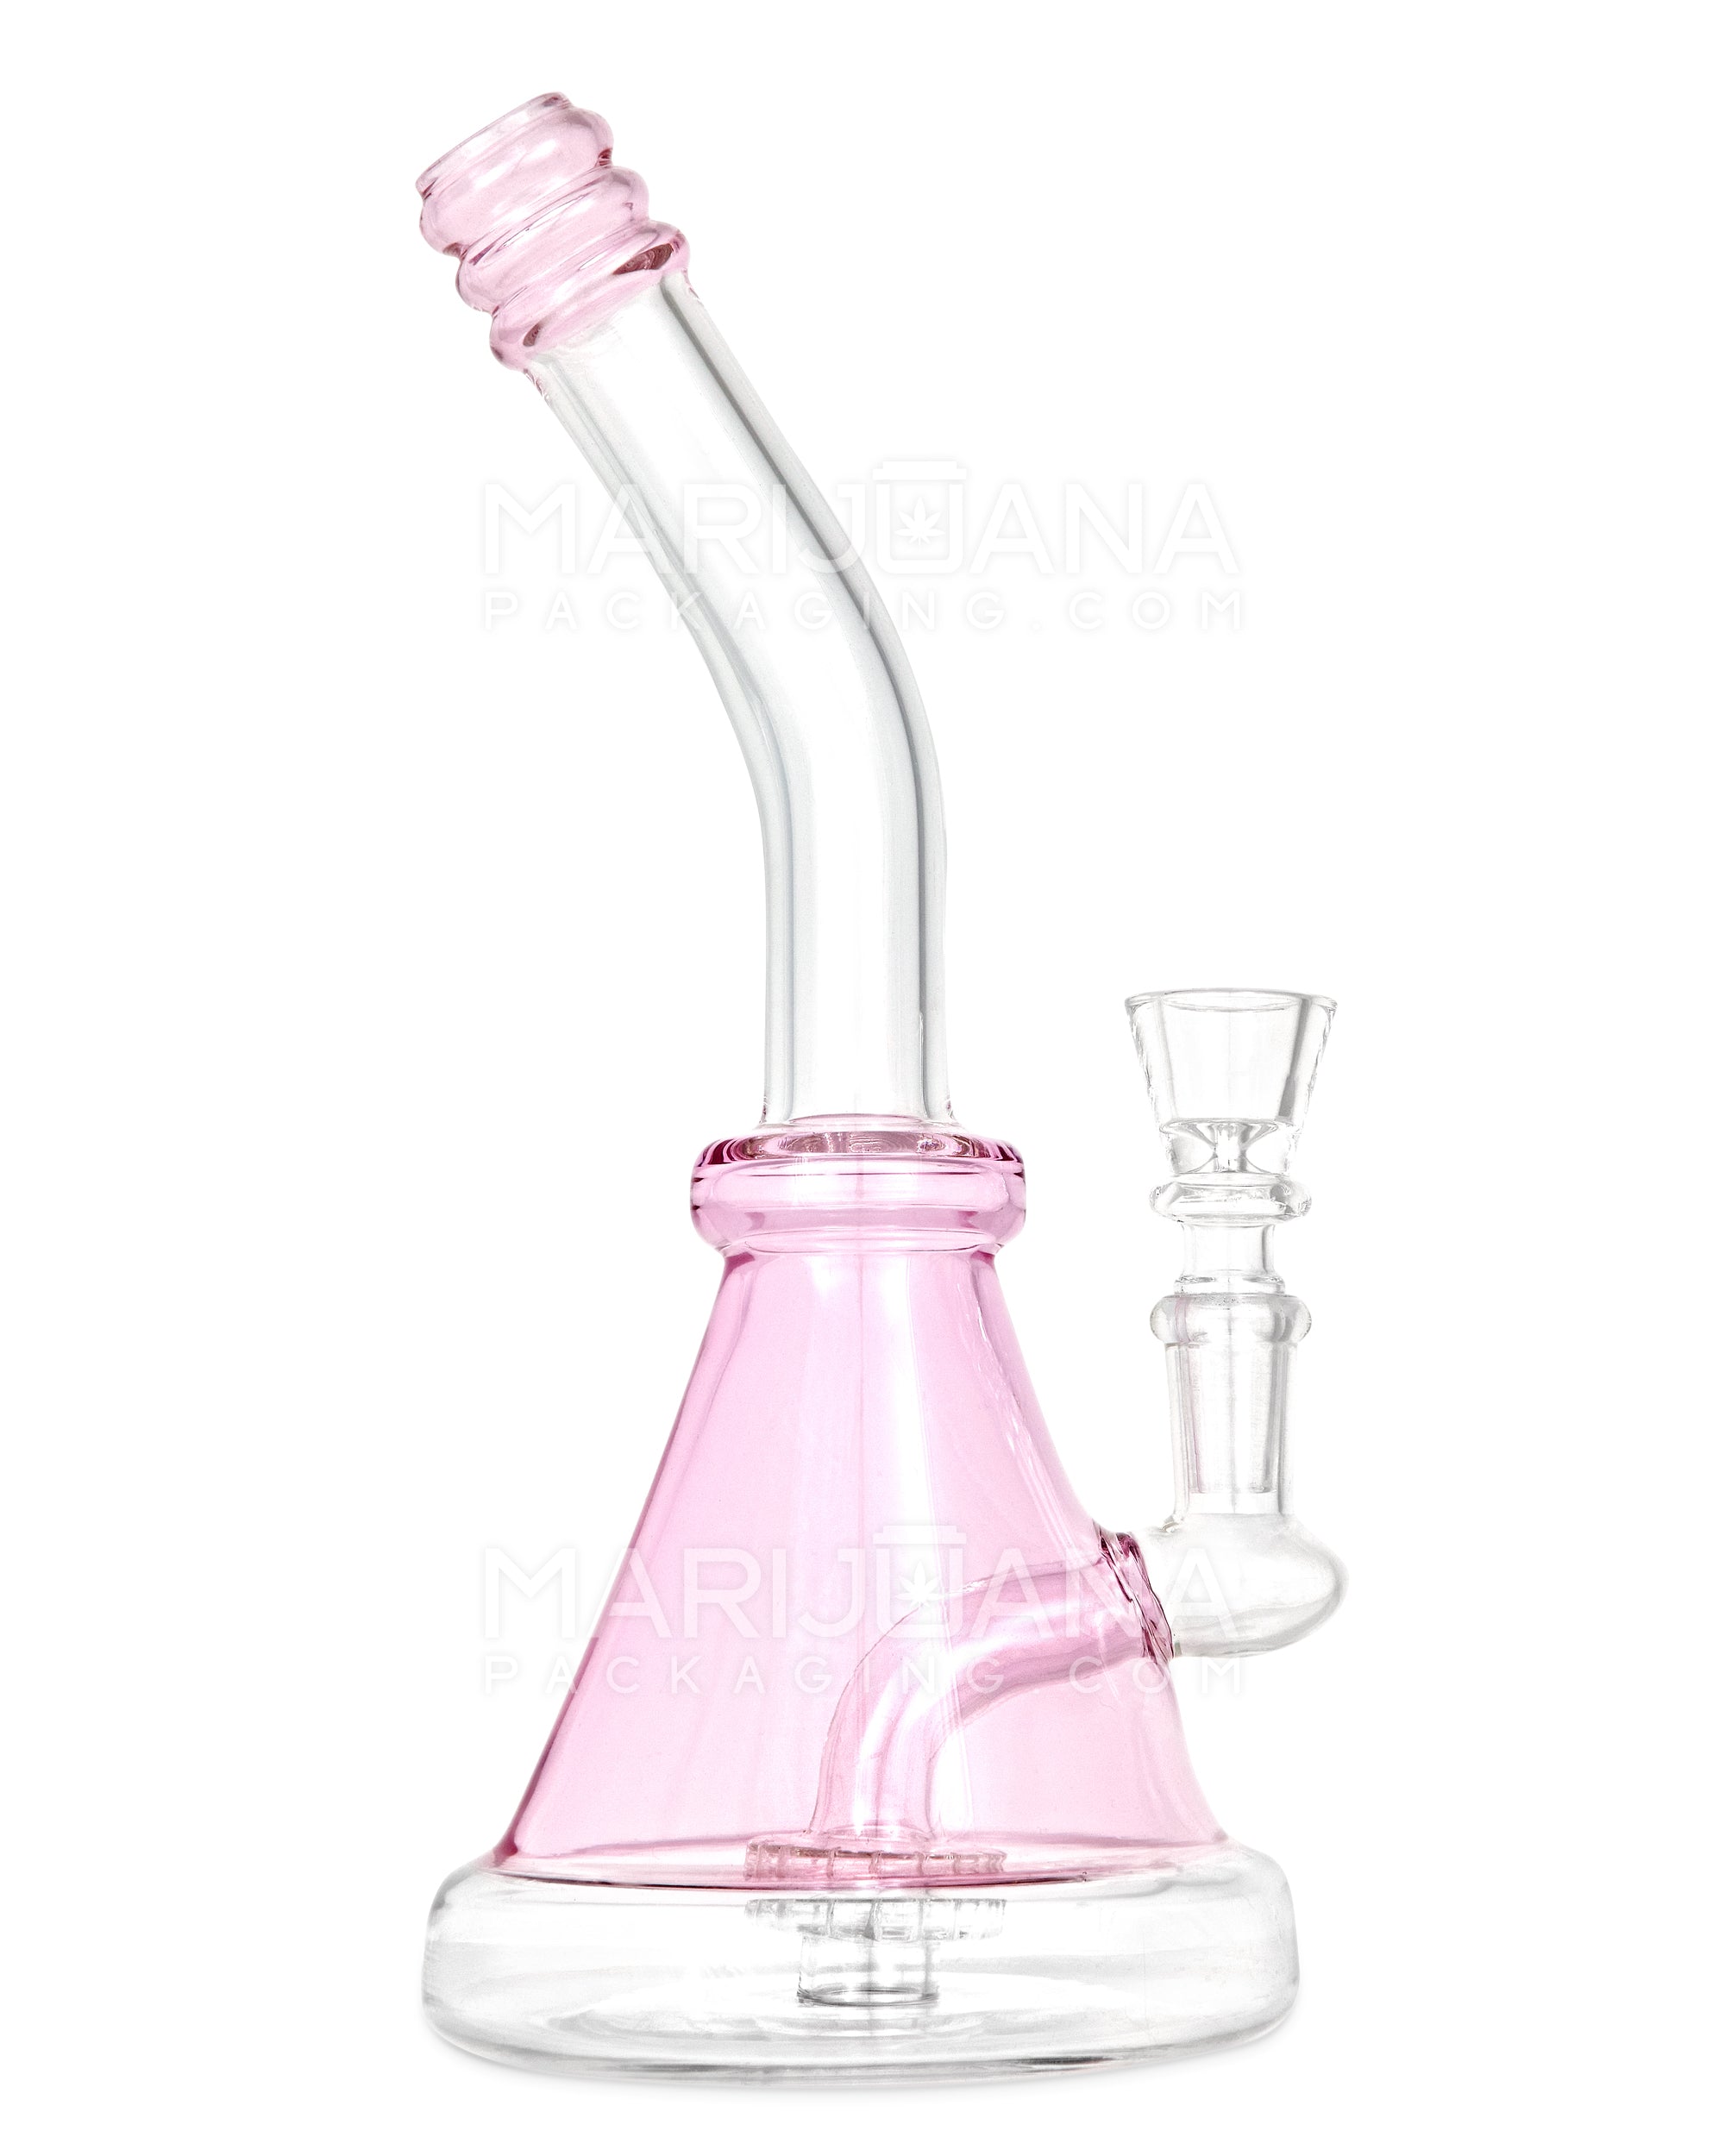 Bent Neck Showerhead Percolator Glass Beaker Water Pipe | 10in Tall - 14mm Bowl - Pink - 1